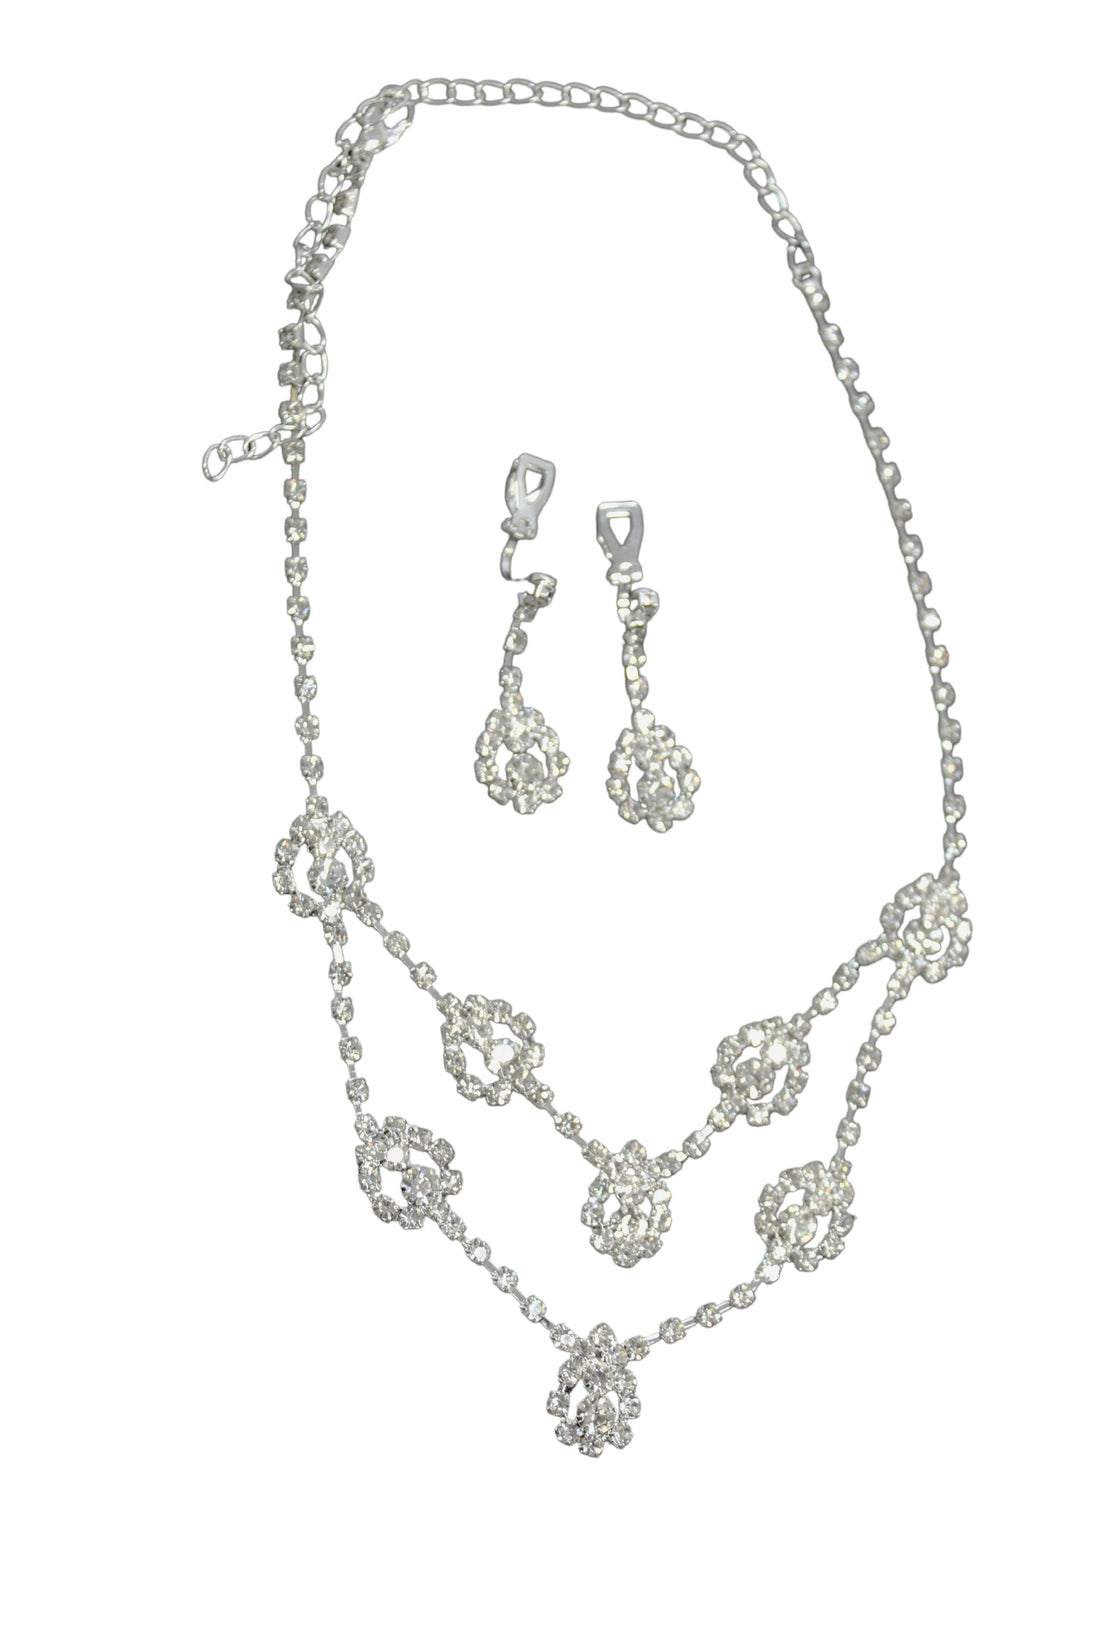 Swarovski Crystal Earring Necklace set TL3023 (Clip on)